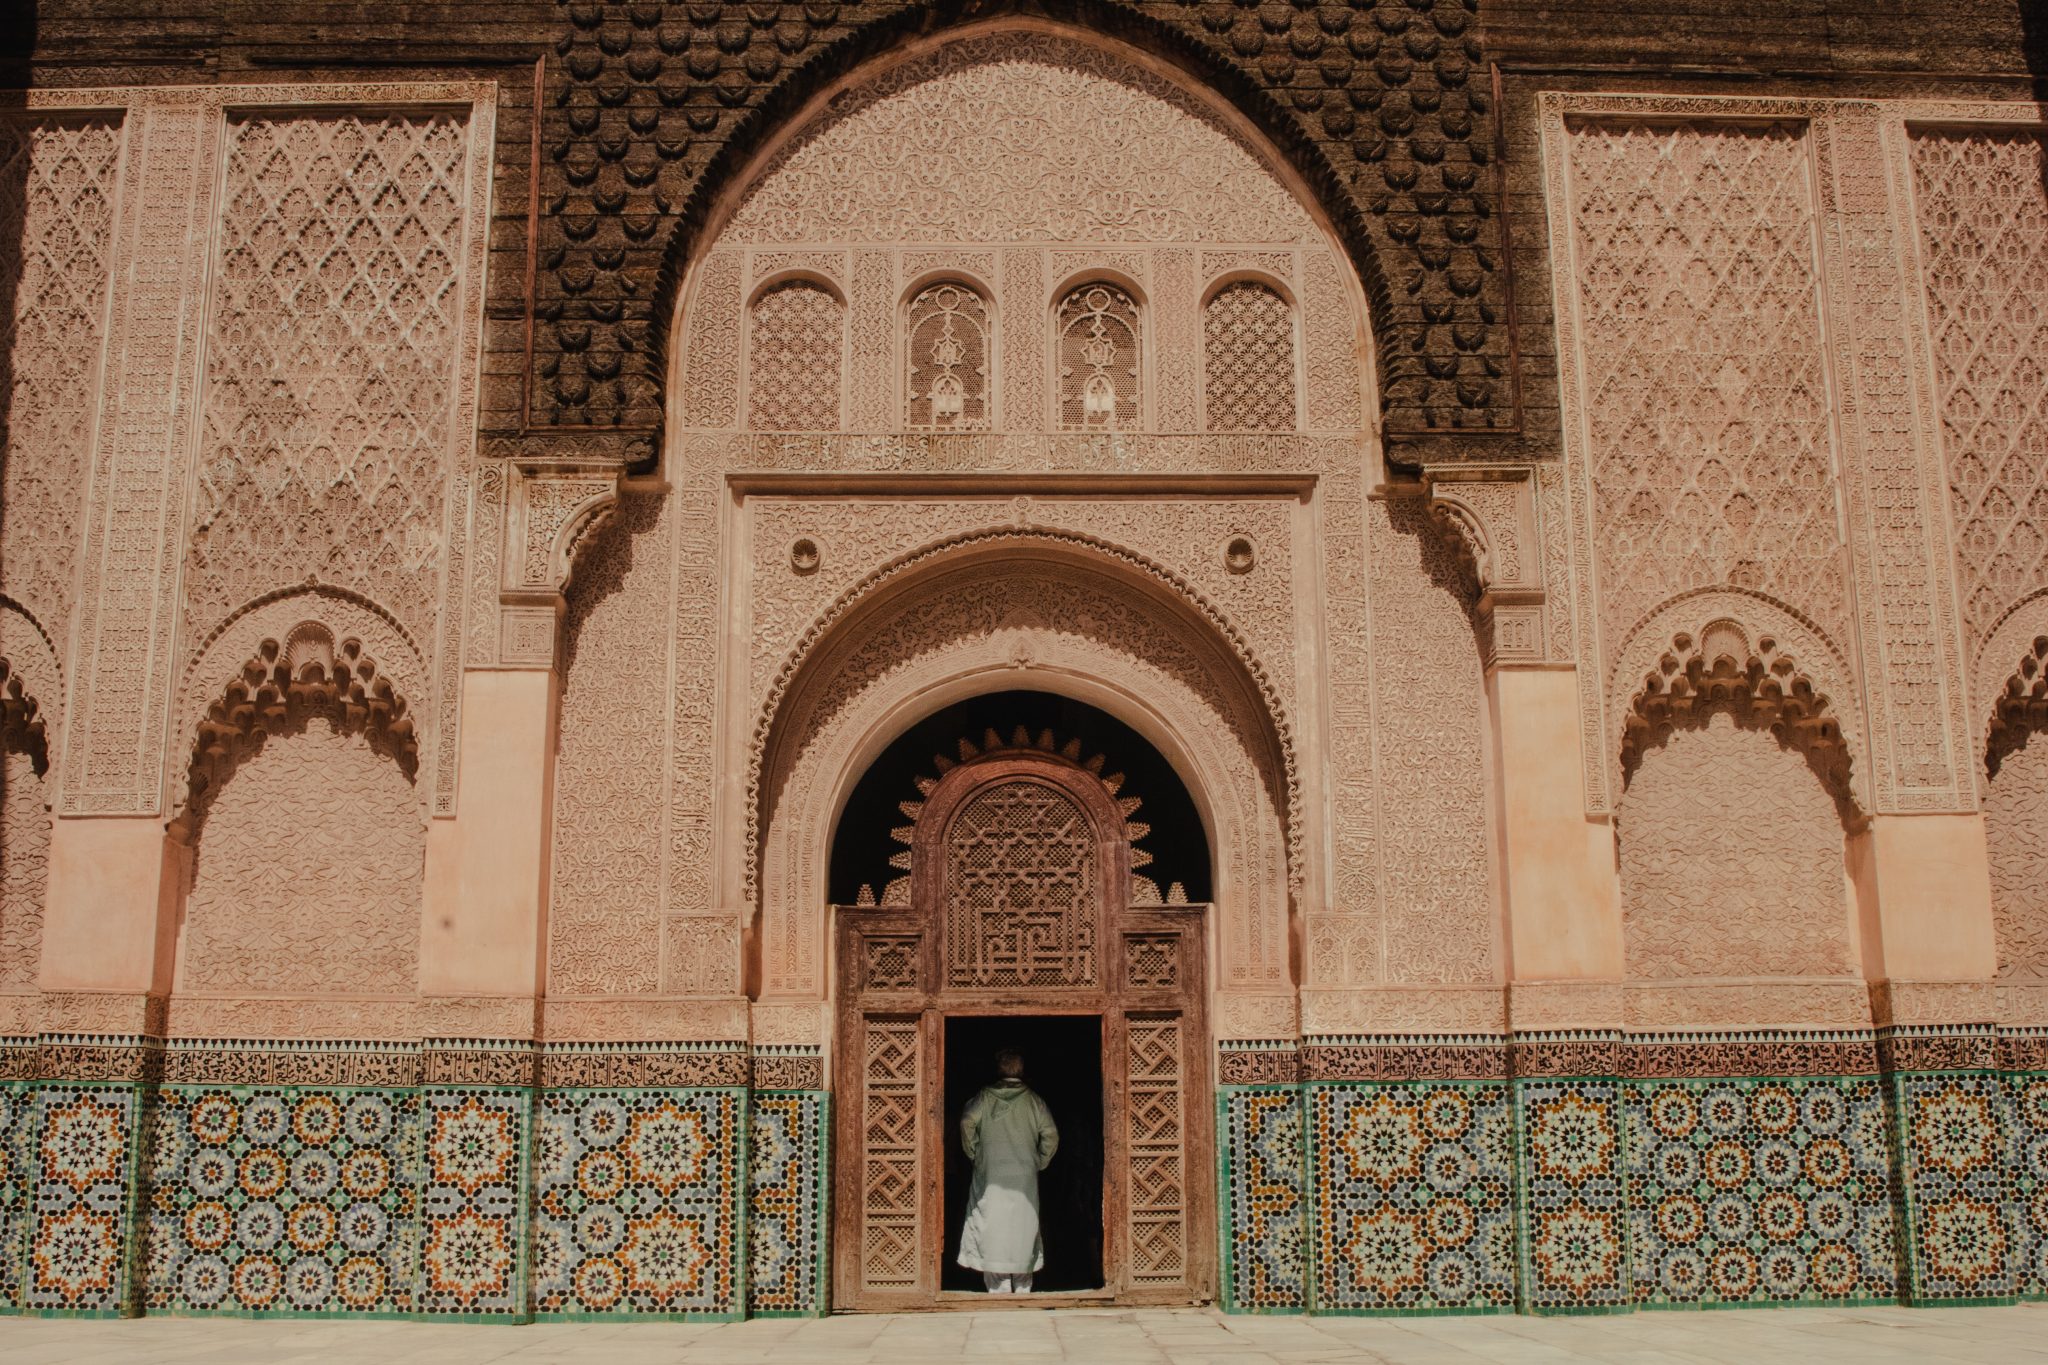 Visiting Morocco During Ramadan